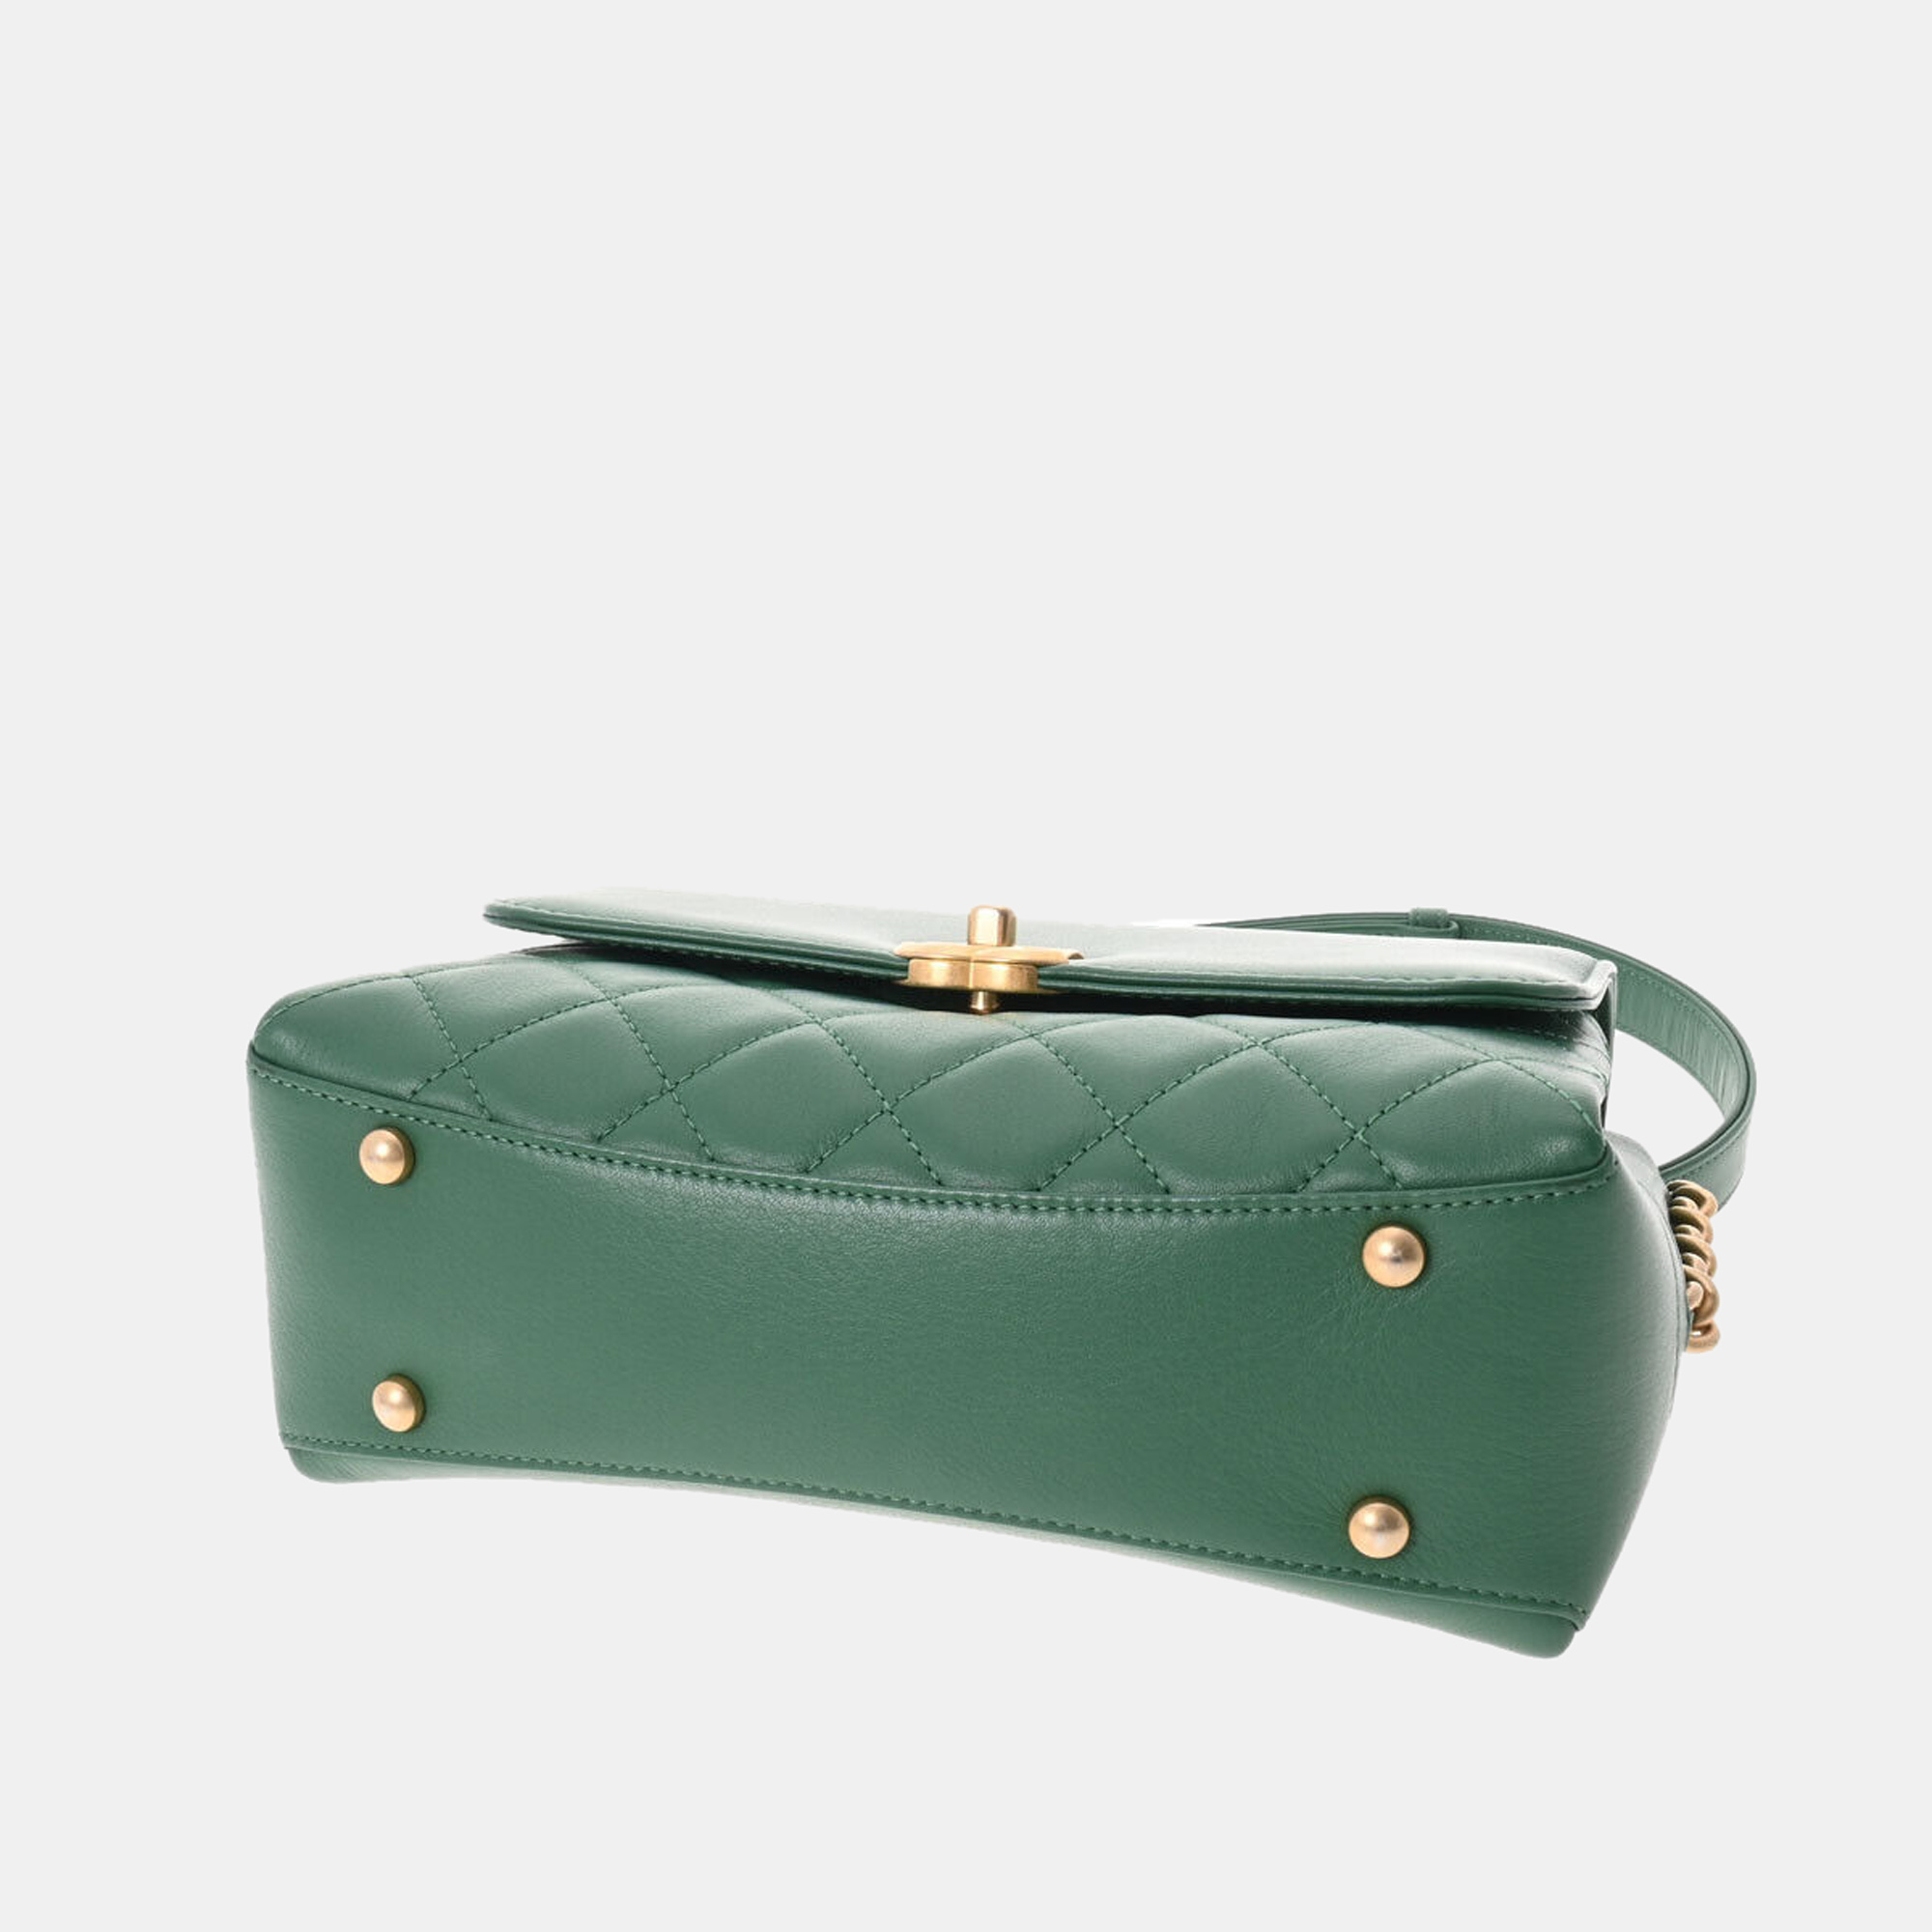 Chanel Green Lambskin Leather CC Shoulder Bag